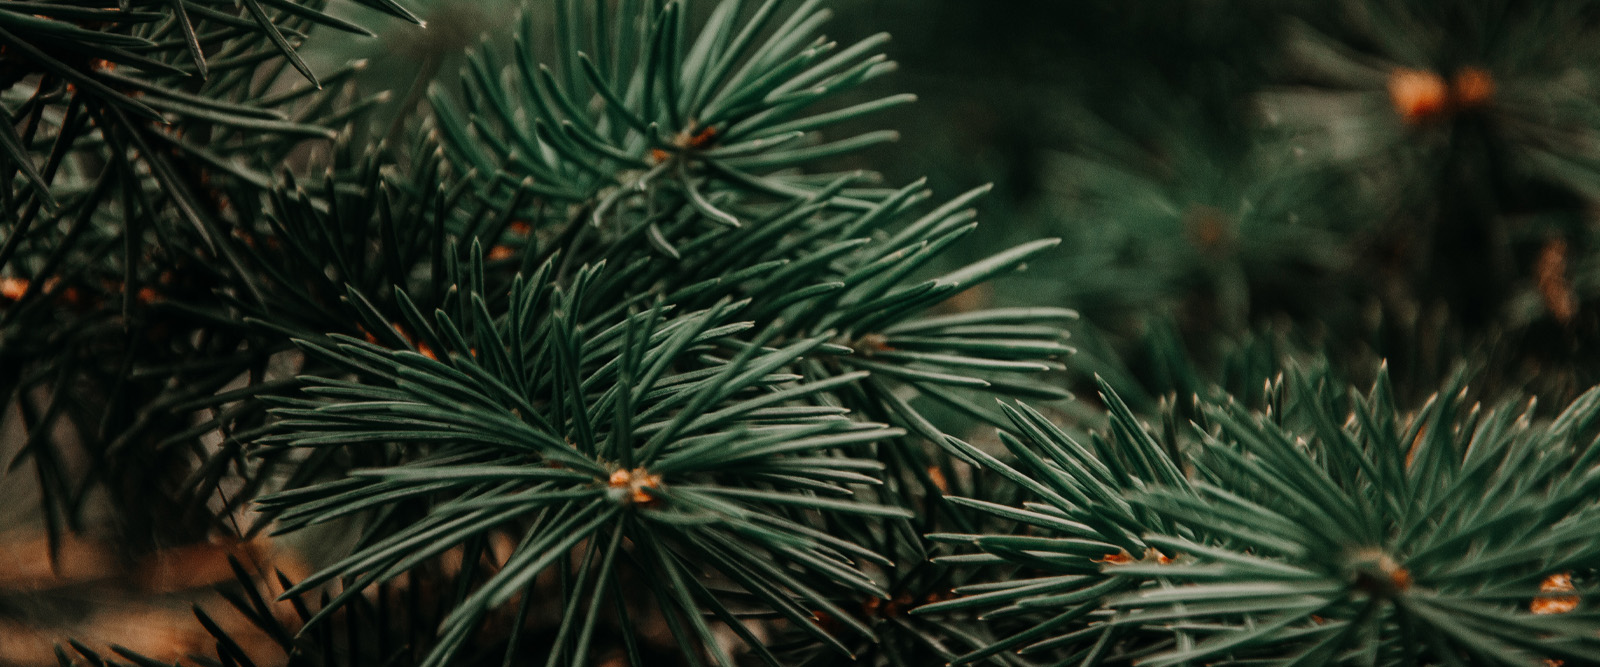 winter pine tree 